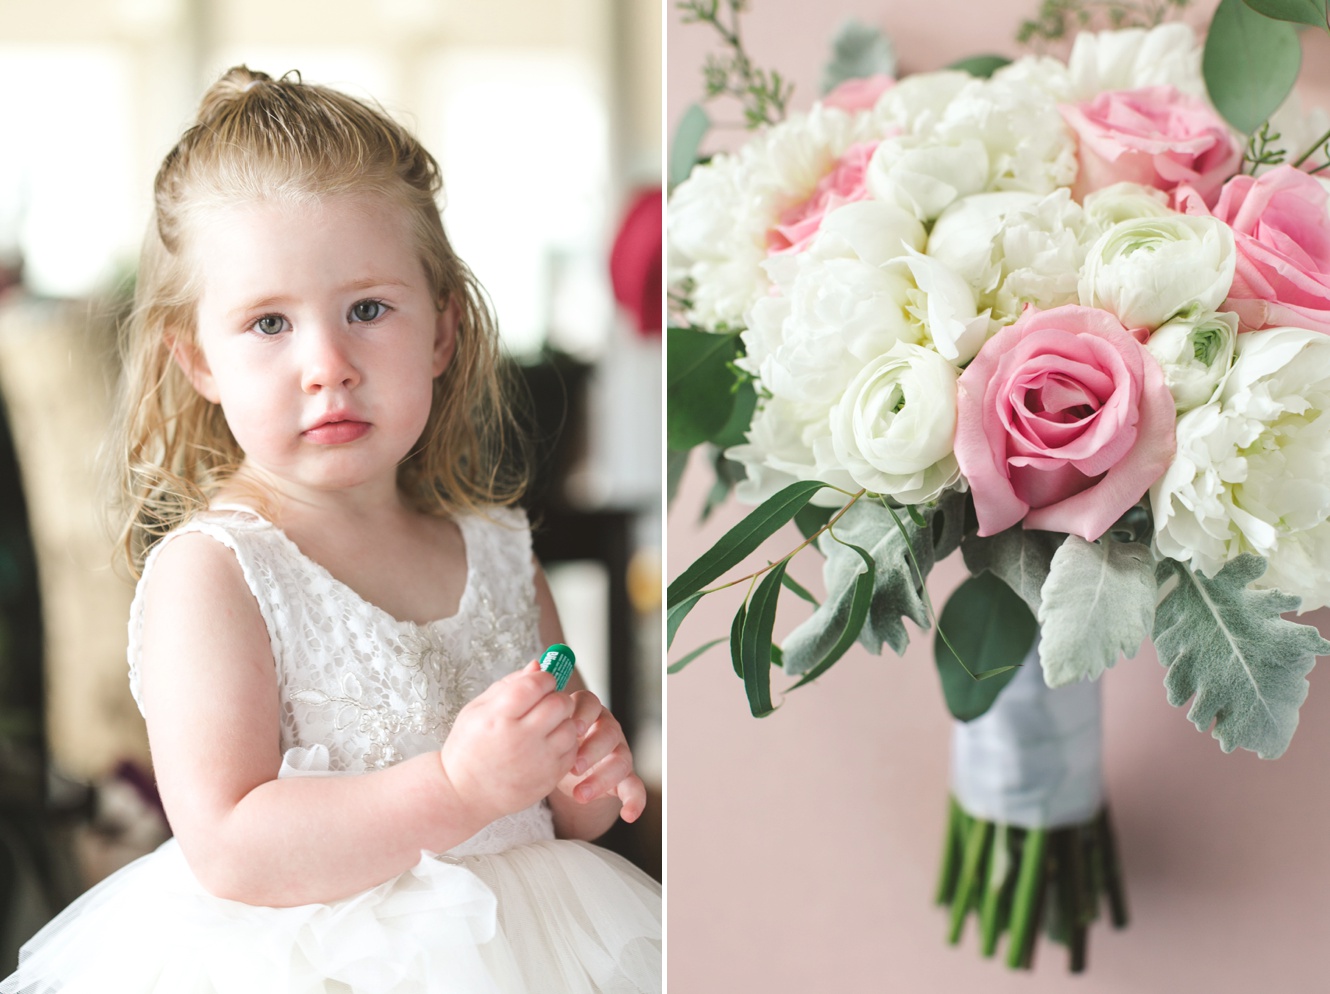 Adorable flowergirl at summer wedding photo